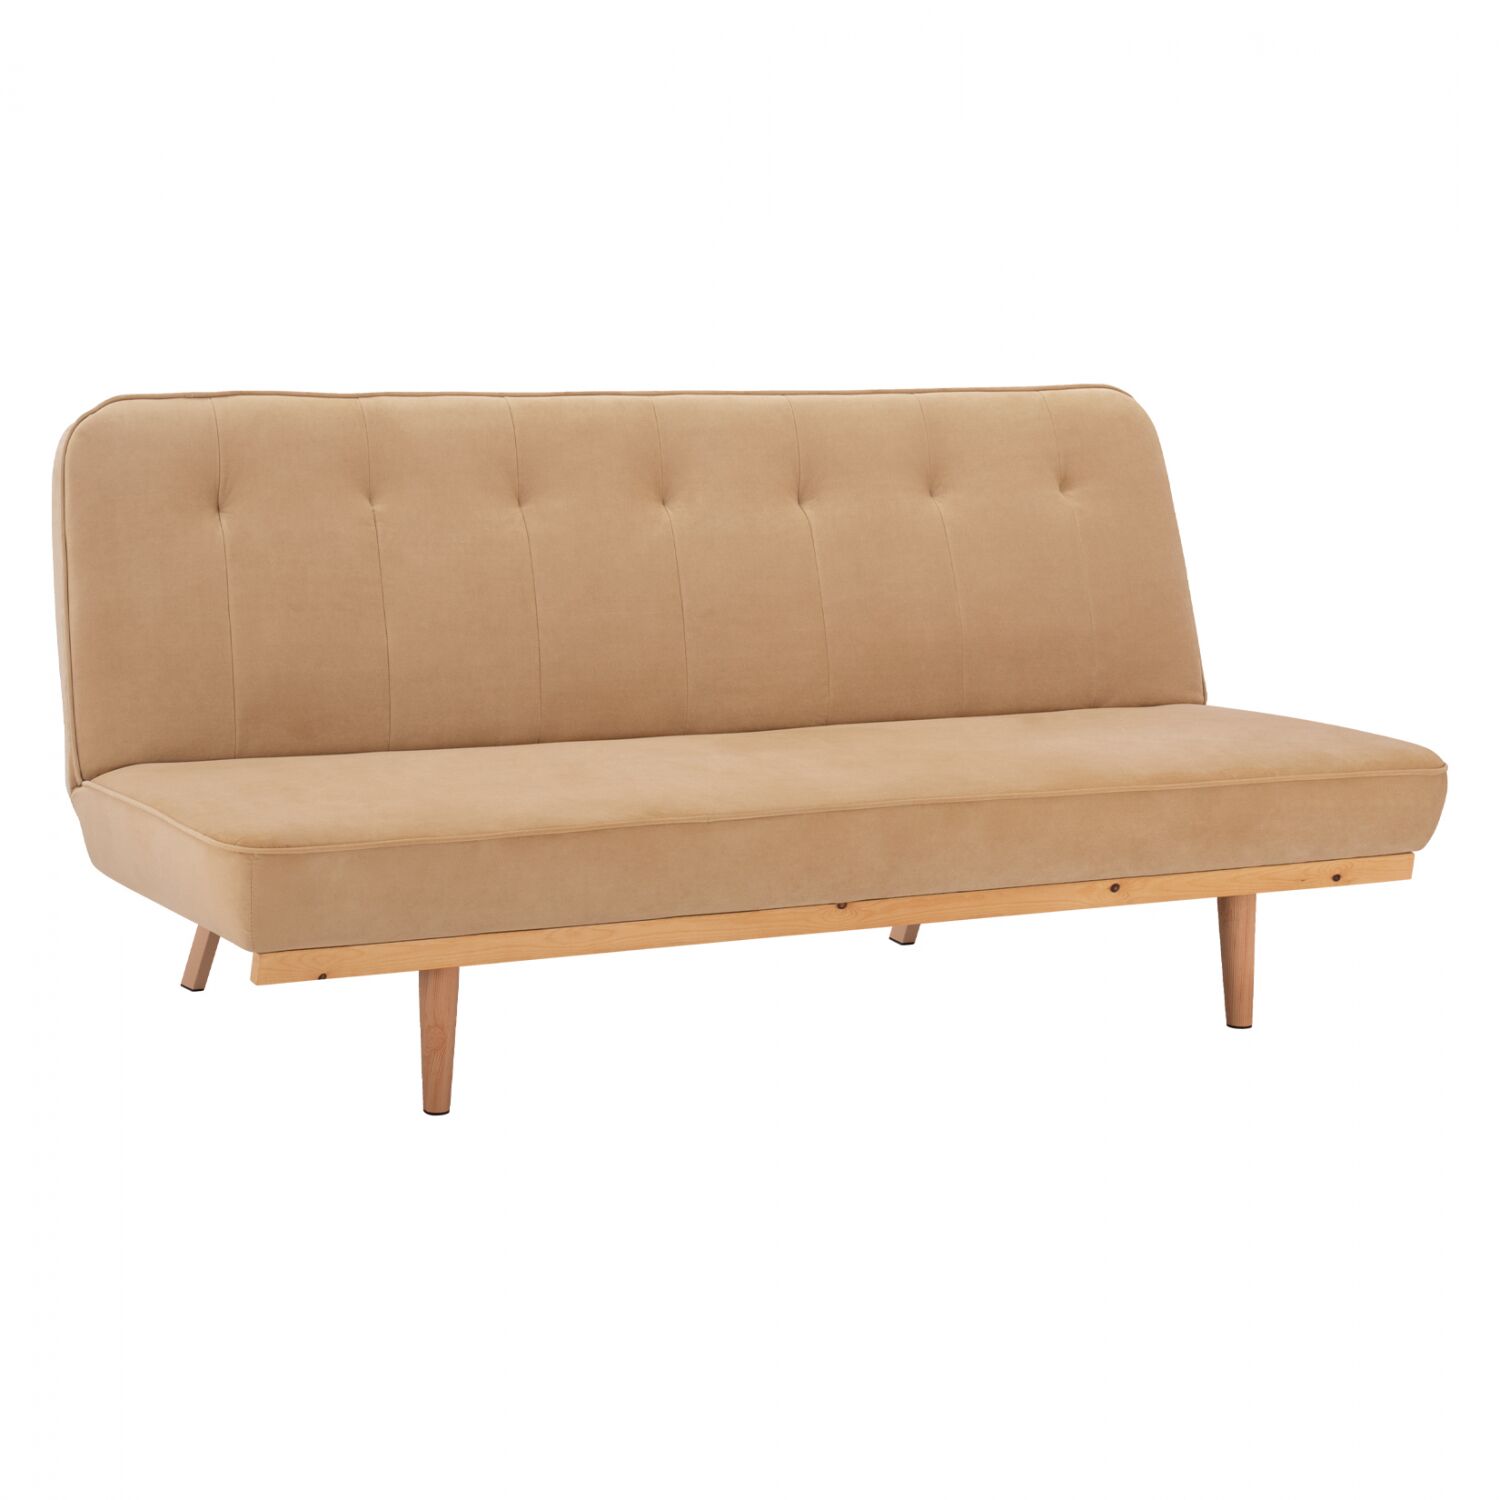 Sofa Bed 3 Seater From Velvet Beige Shade HM3168.07 193x85x88 cm.